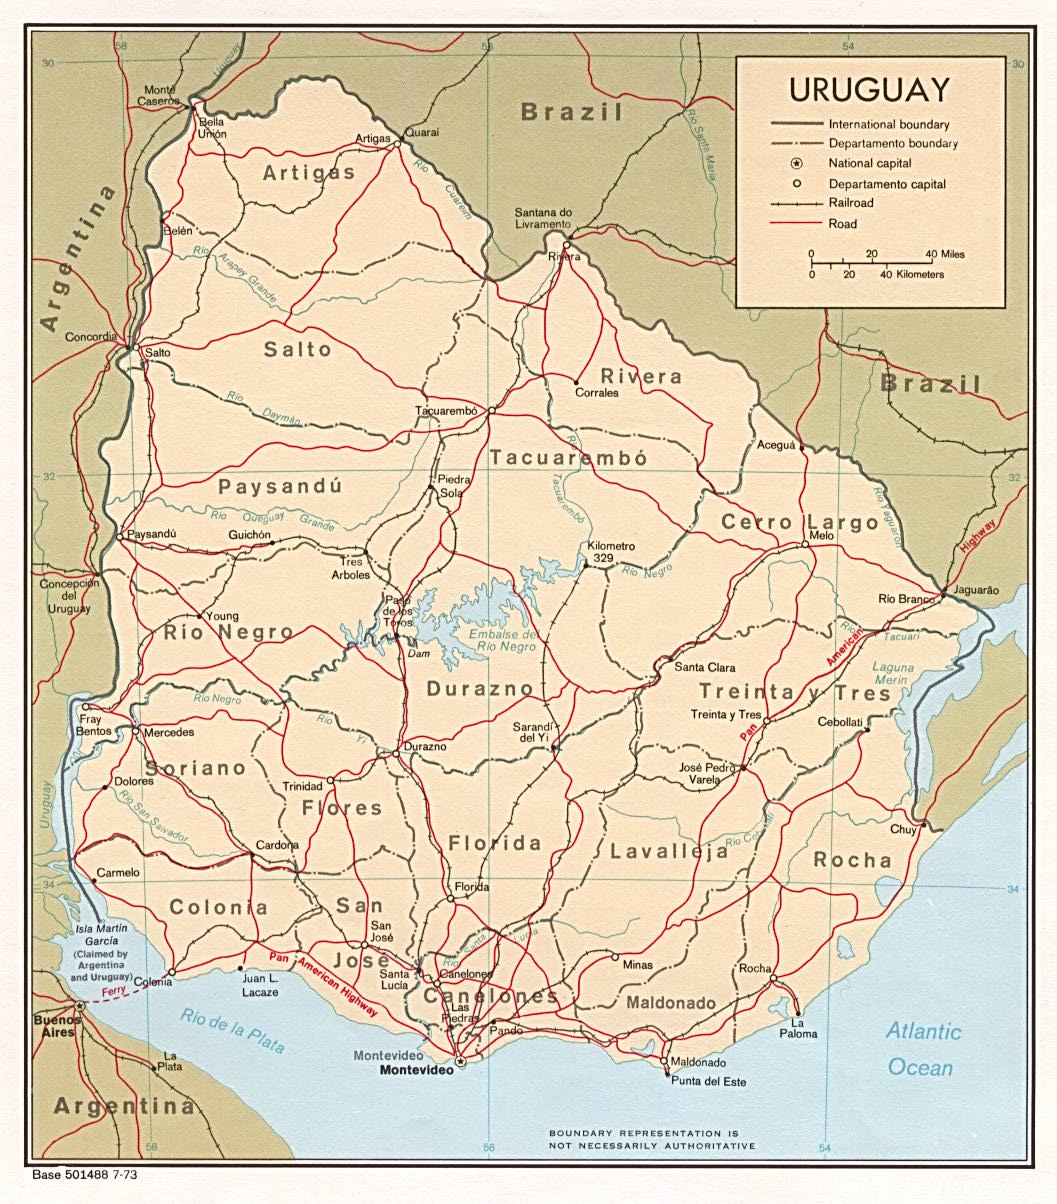 http://www.lib.utexas.edu/maps/americas/uruguay.jpg